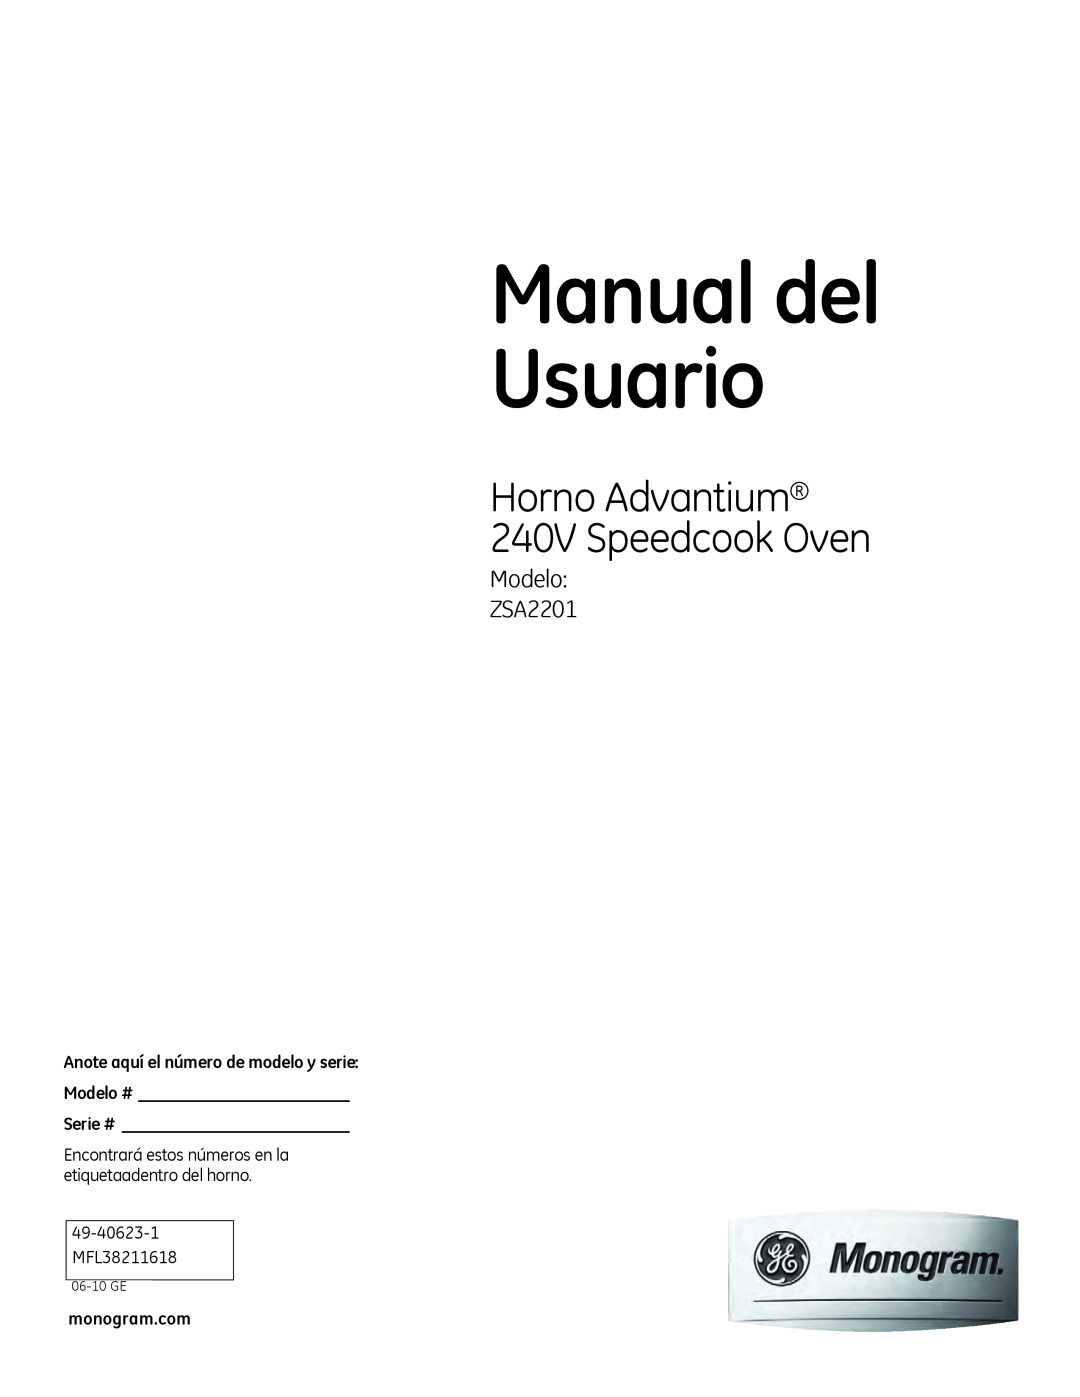 GE owner manual Manual del Usuario, Horno Advantium 240V Speedcook Oven, Modelo ZSA2201, monogram.com, 06-10 GE 